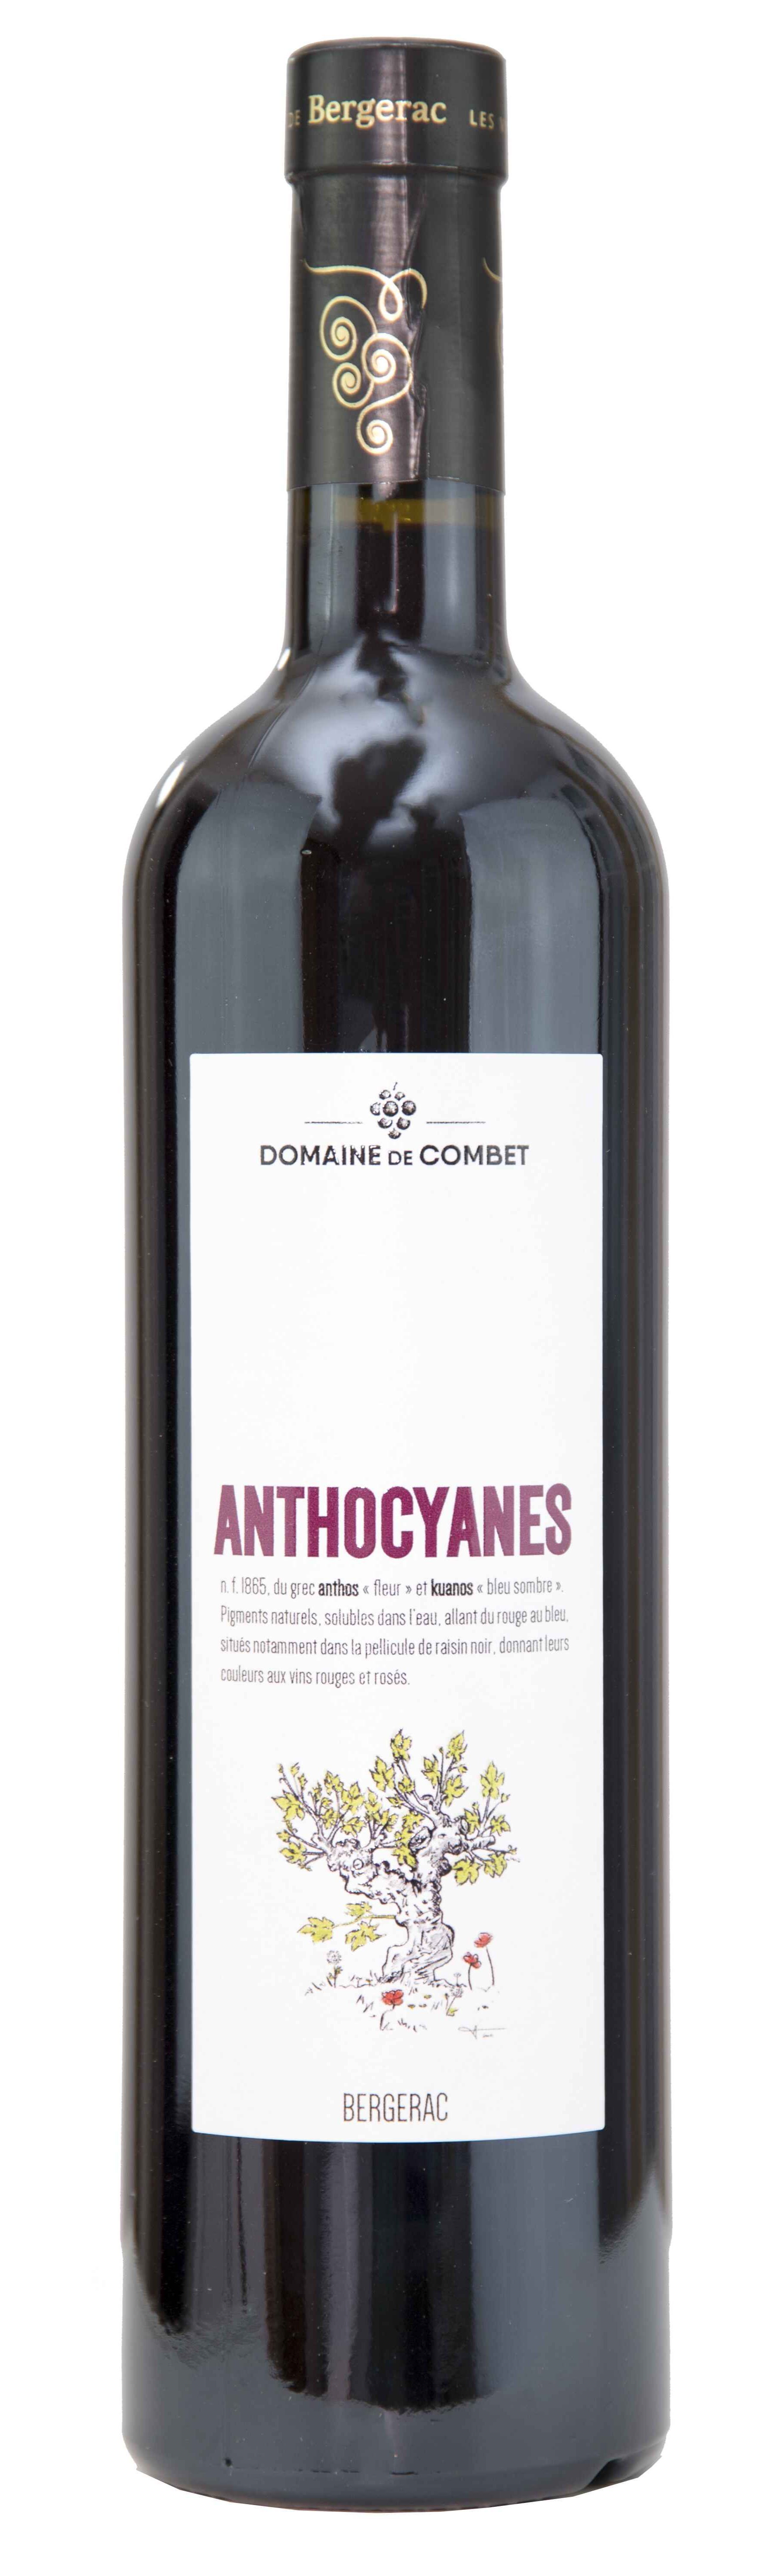 Earl de Combet ANTHOCYANES, Rot, 2021, Bergerac. Bottle image